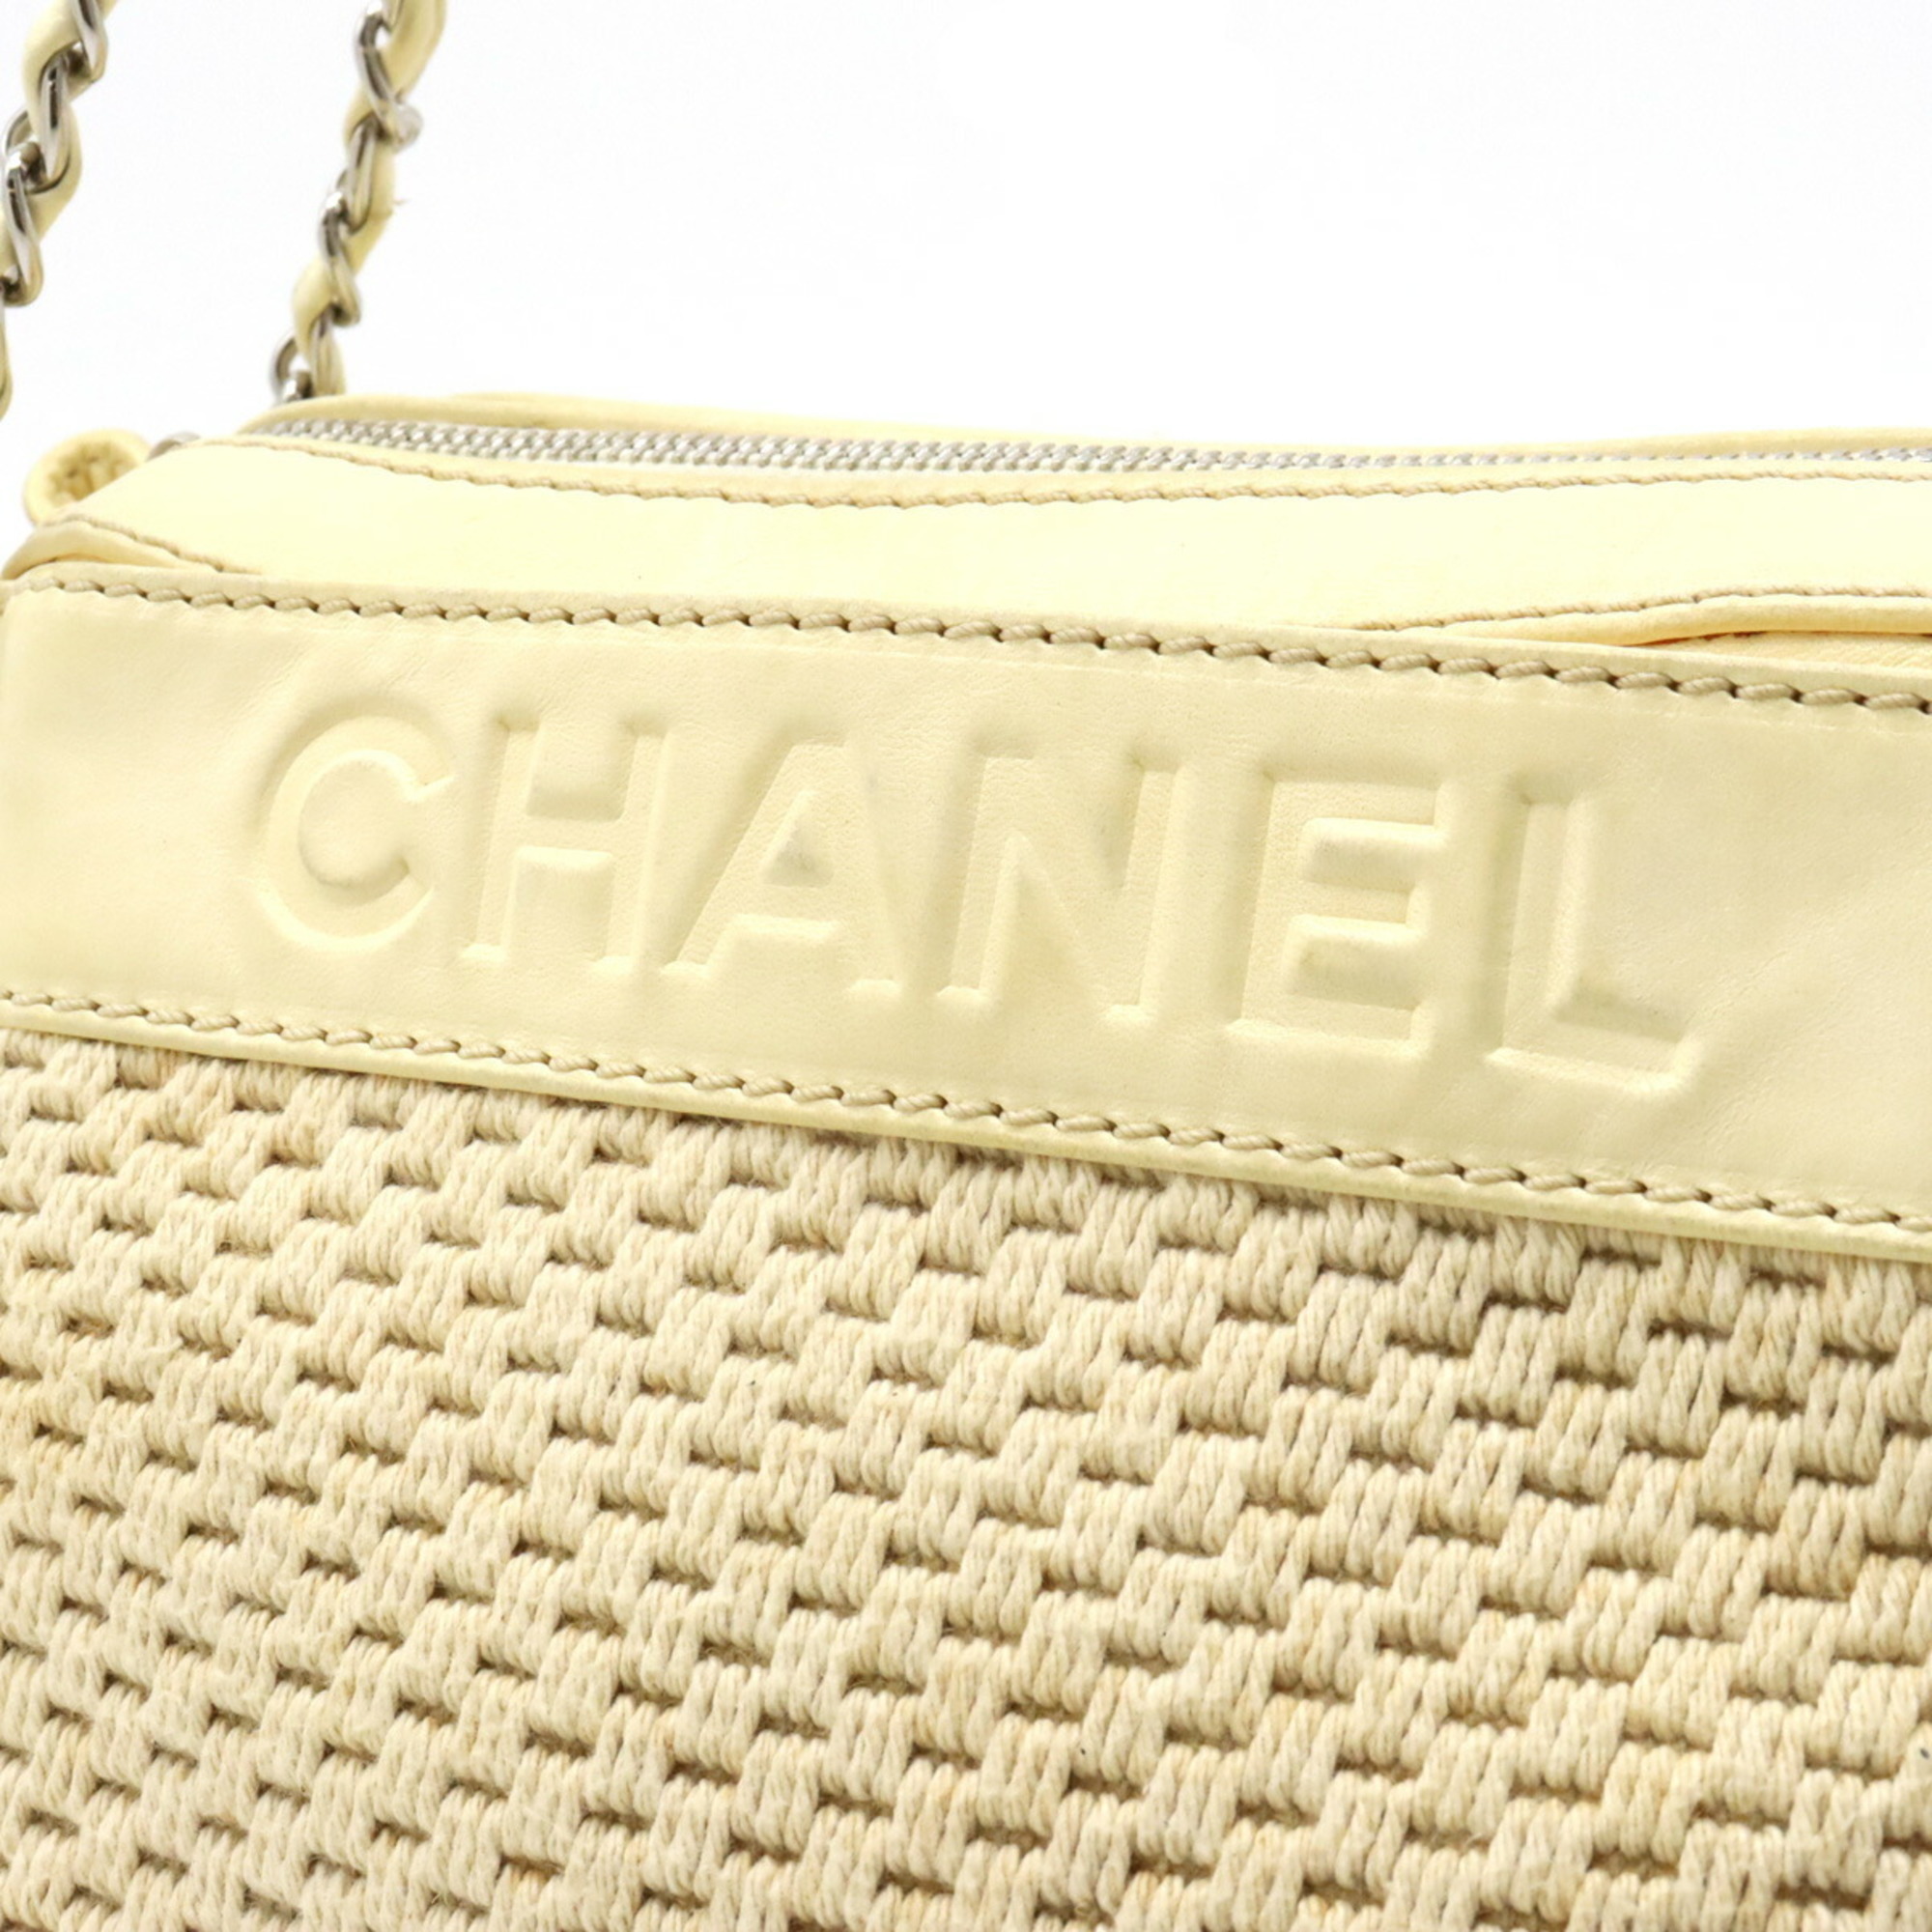 CHANEL Chain bag shoulder tote cotton canvas leather beige cream